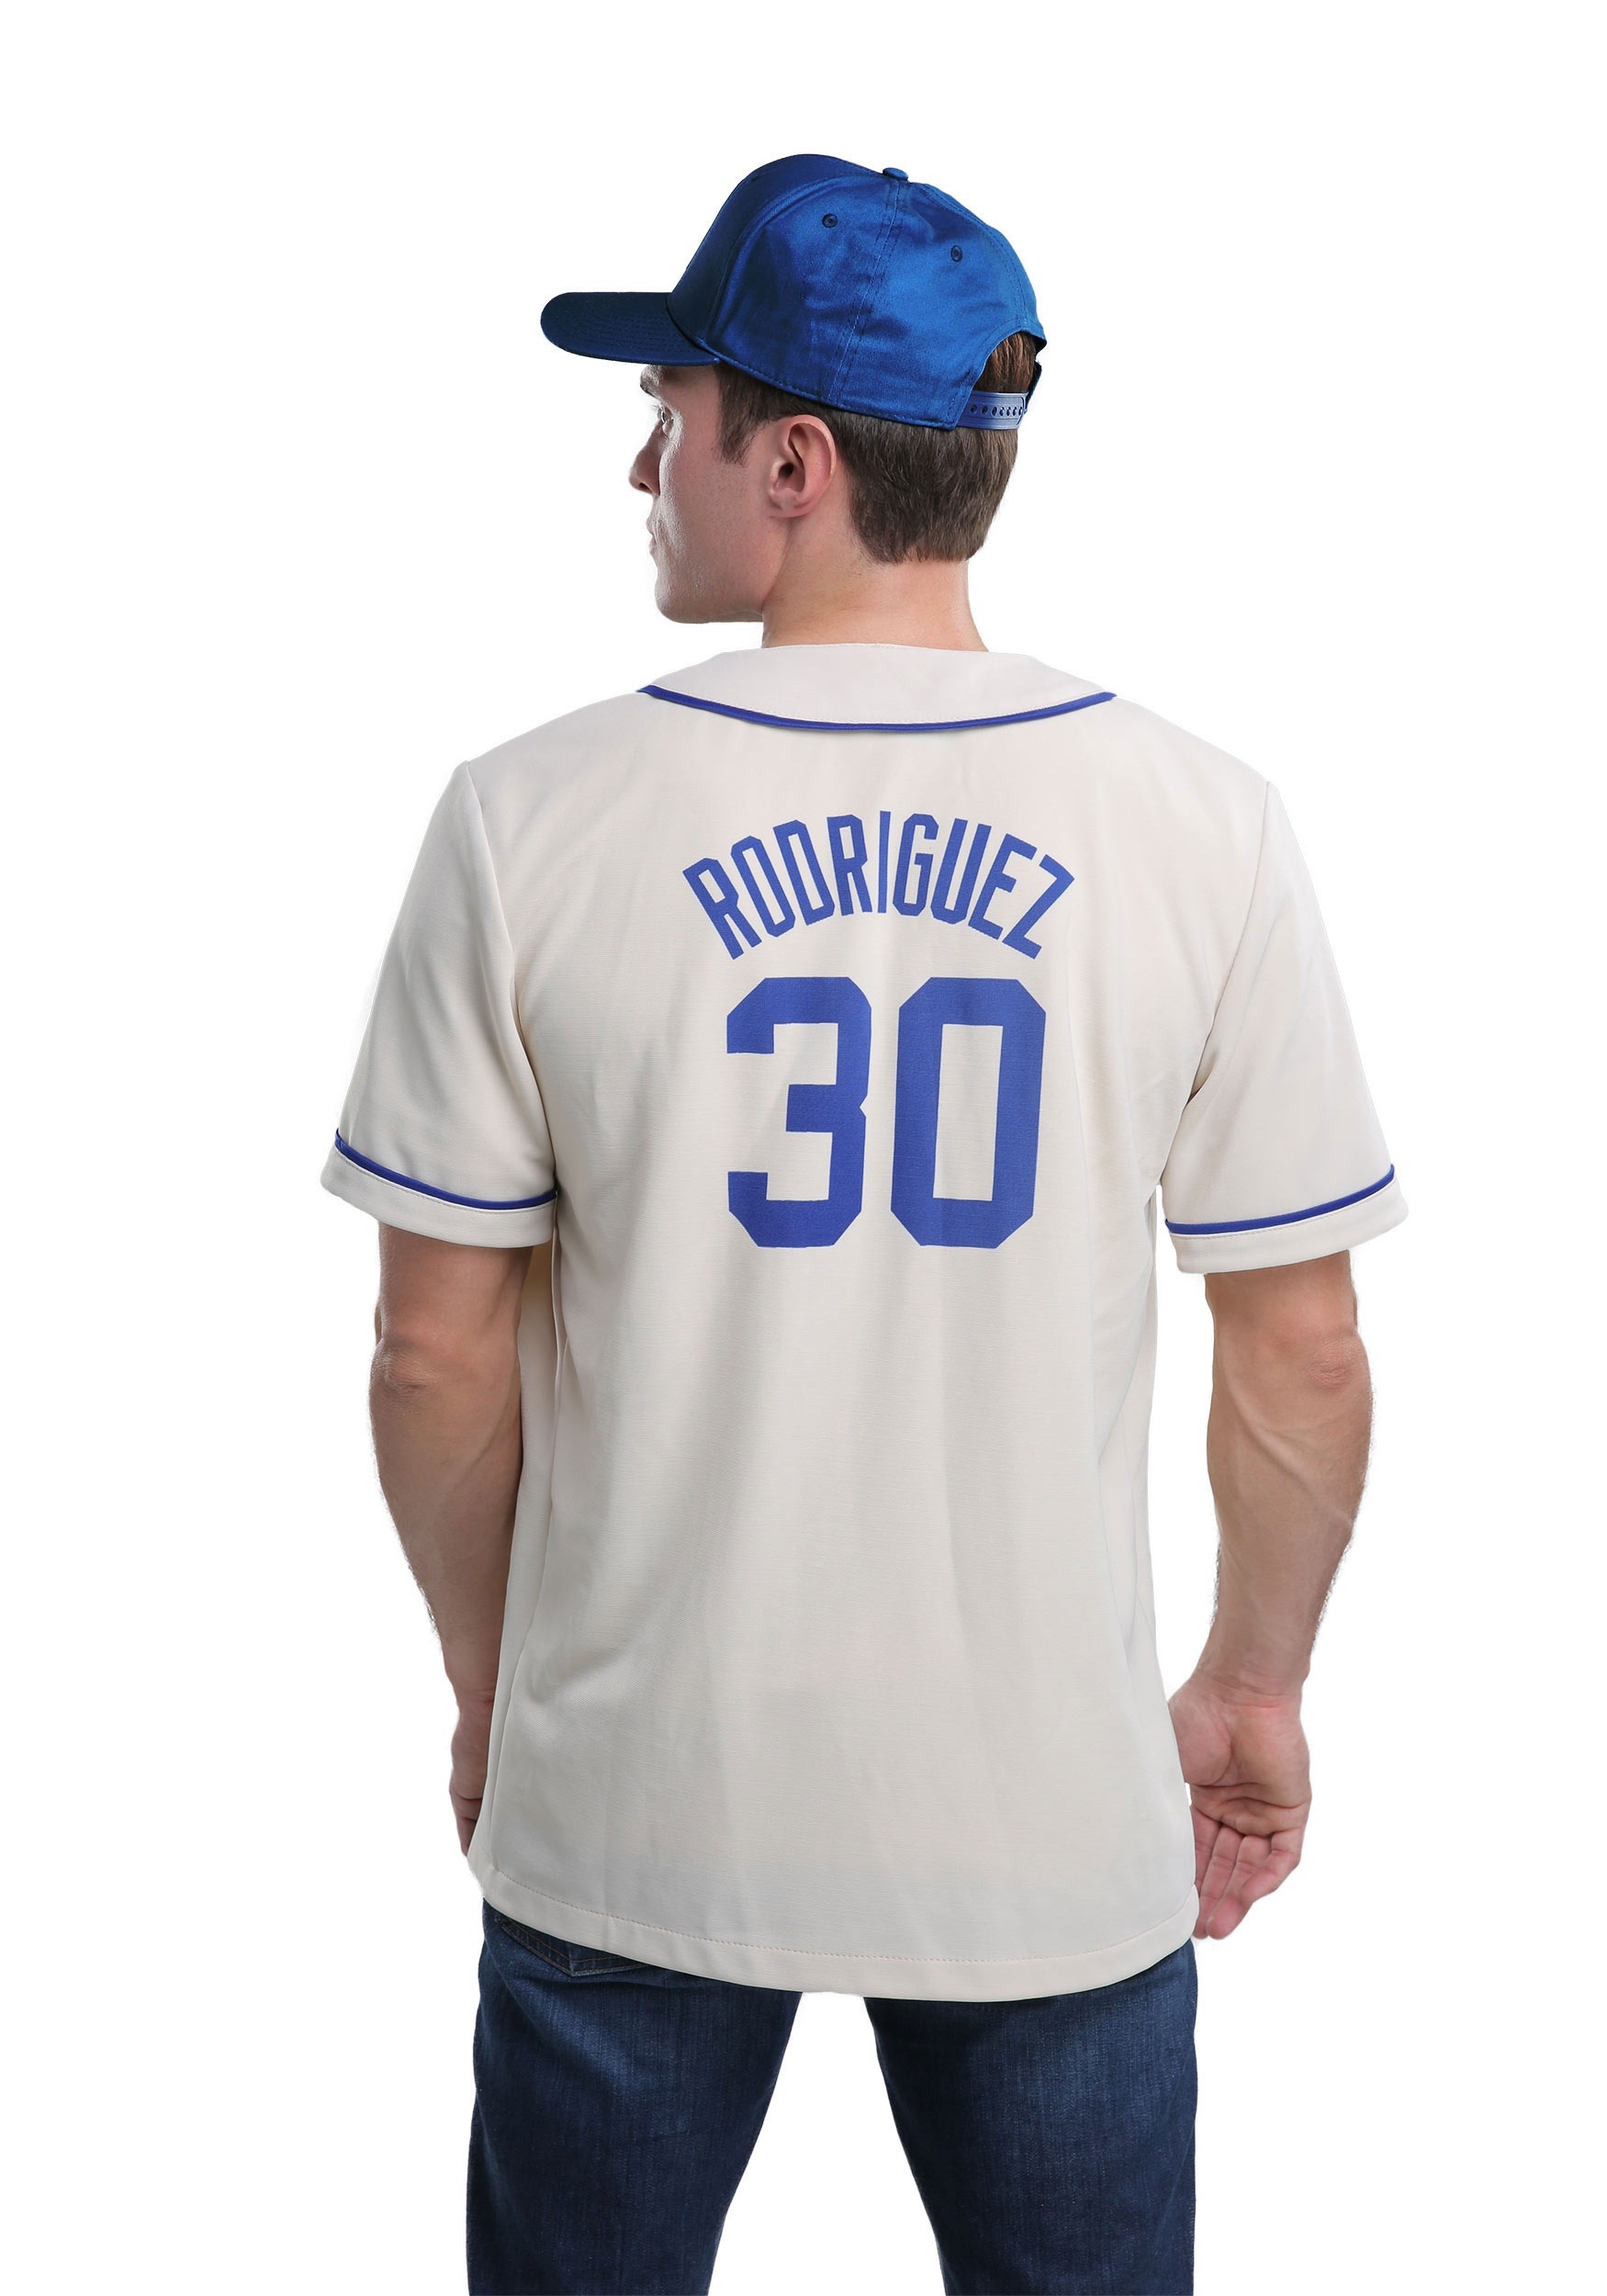 Benny The Jet Rodriguez Jersey T-Shirt Sandlot Costume SL Baseball